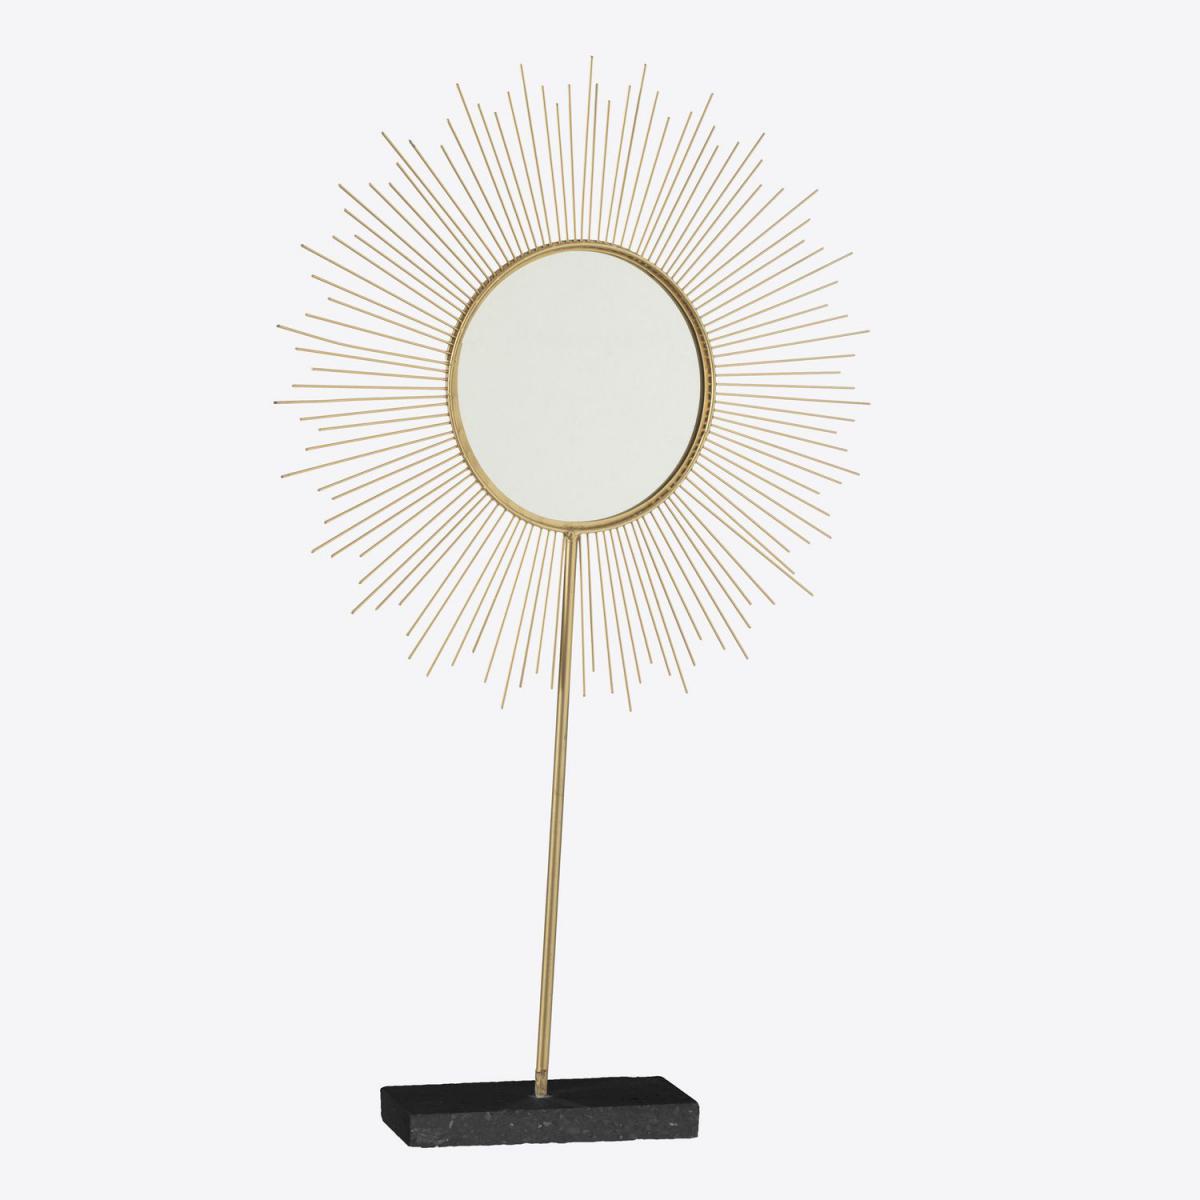 JJA - Miroir à poser design métal Soleil Merveilleux - Diam. 40 cm - Doré - Miroirs